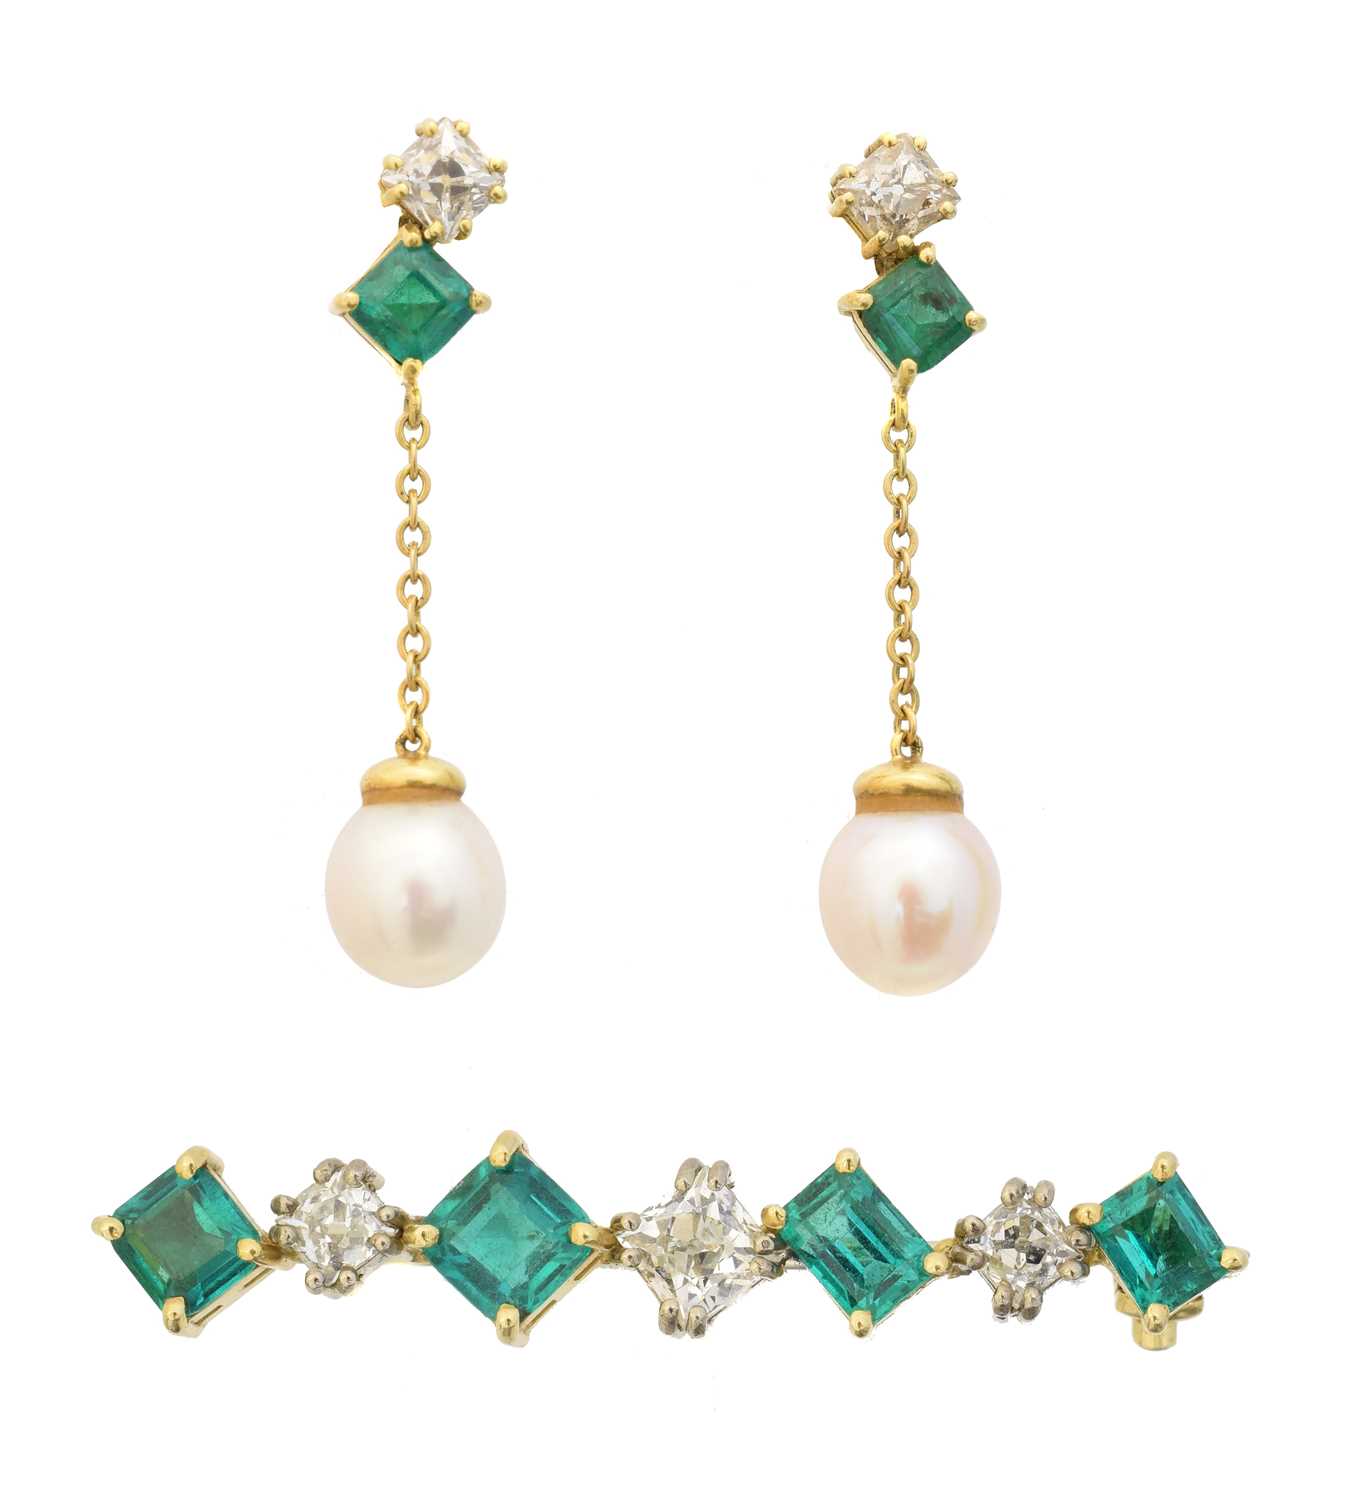 Lot A set of emerald and diamond jewellery